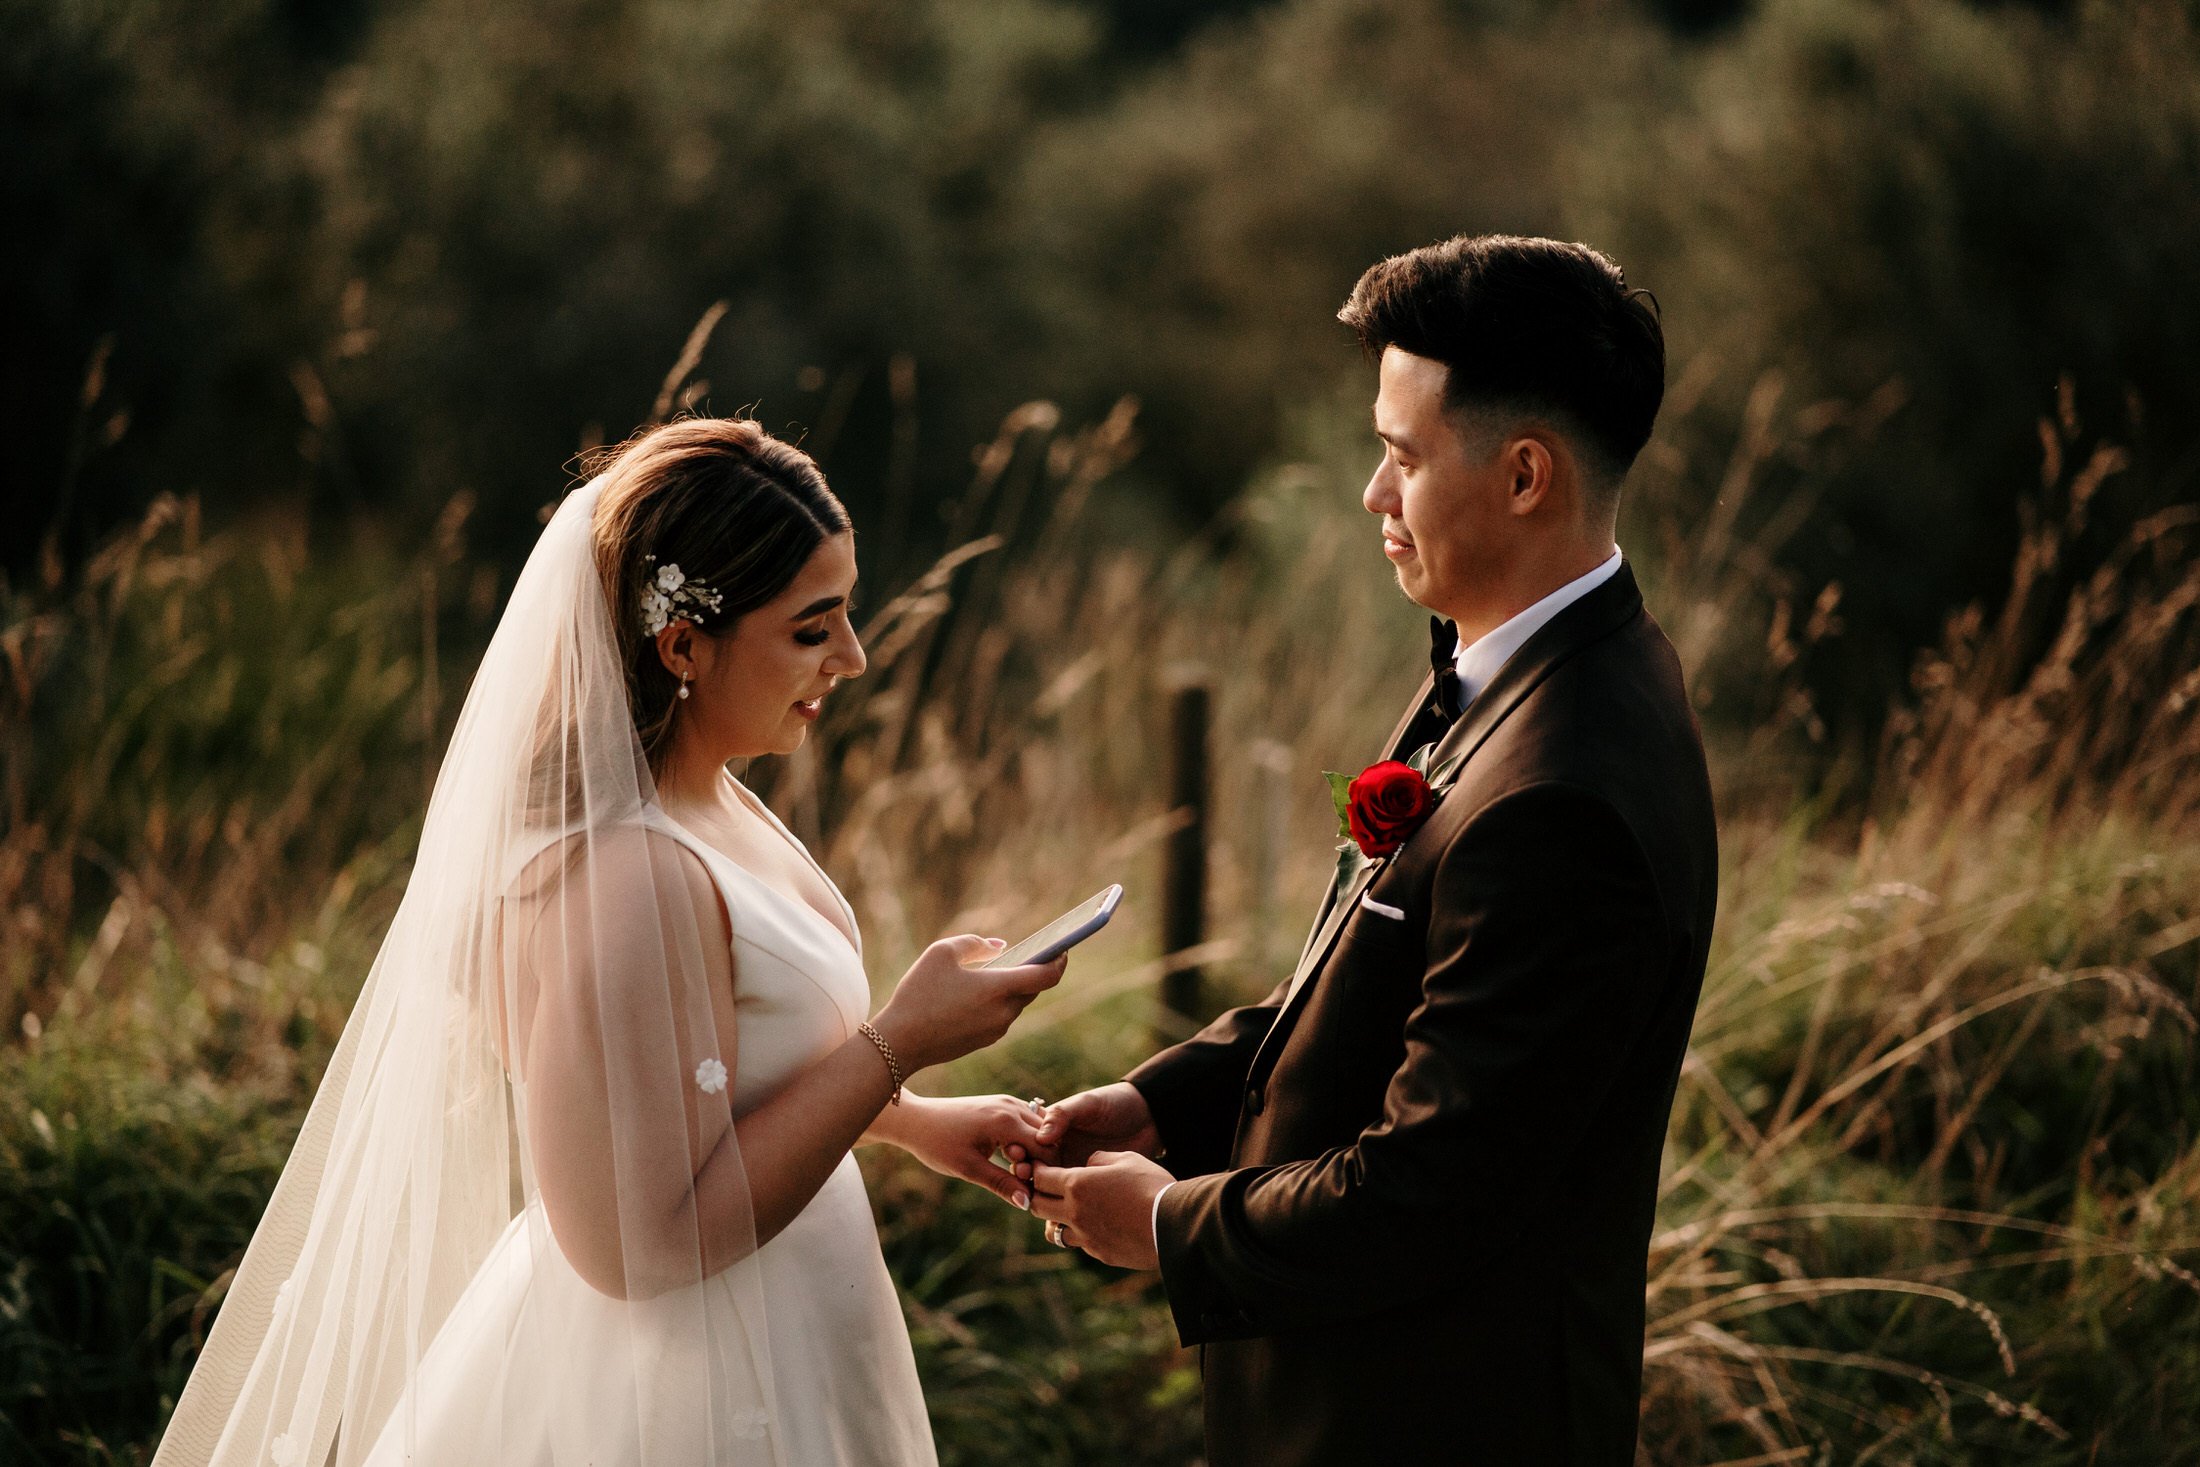 Auckland Wedding Photographer | Auckland Wedding Videographer | Auckland Wedding Venue | Bracu Estate Venue | South Auckland Venue | Auckland Photographer | Hill side Wedding Photography